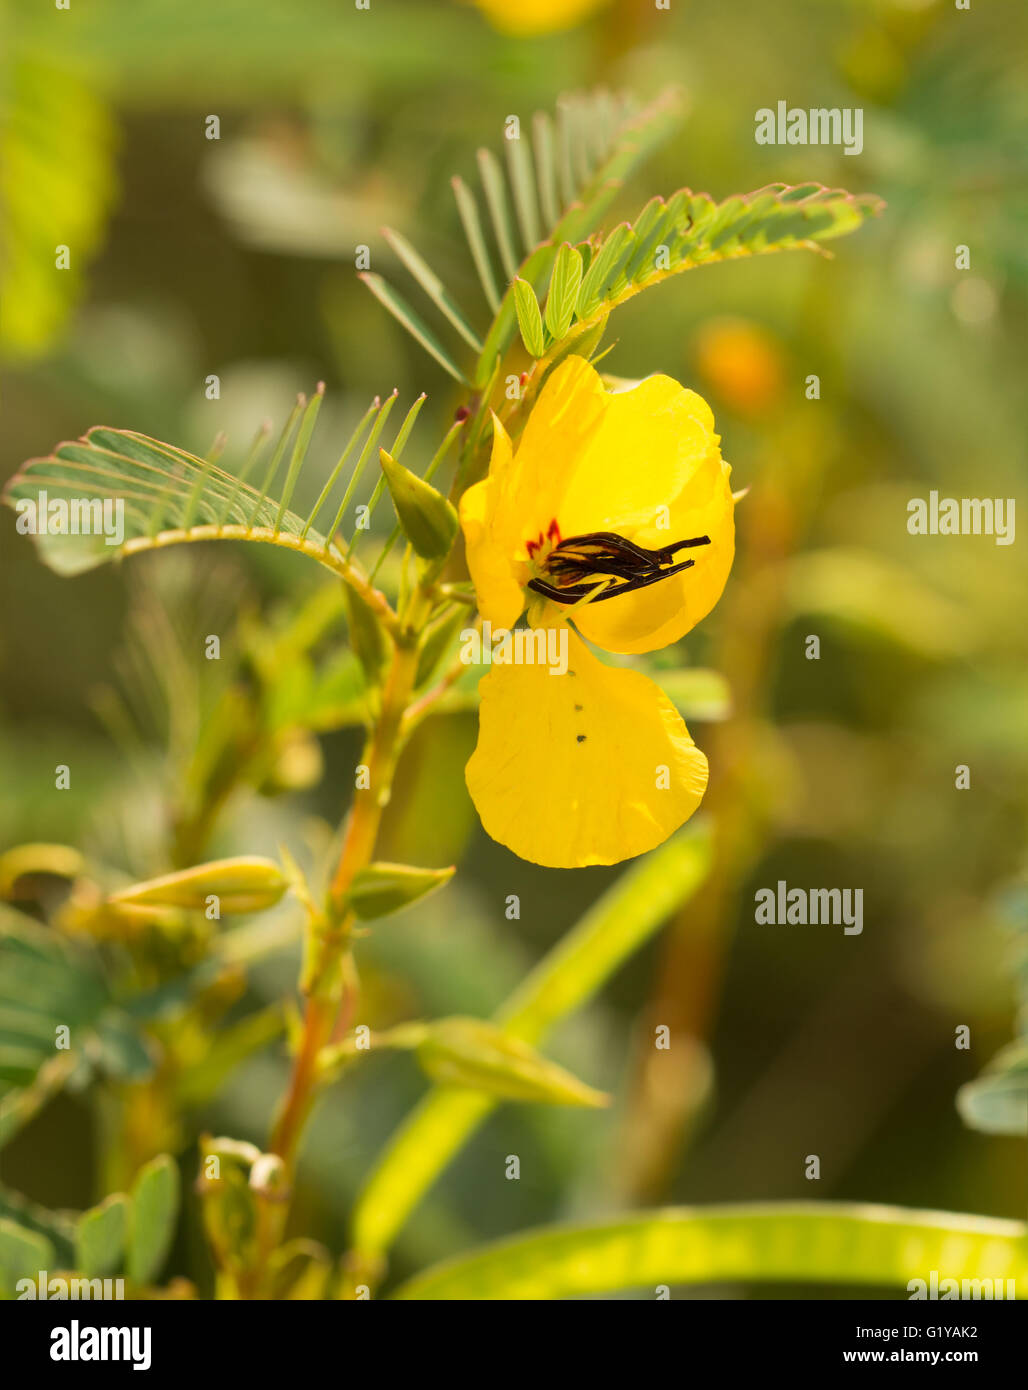 Flor hermafrodita fotografías e imágenes de alta resolución - Alamy